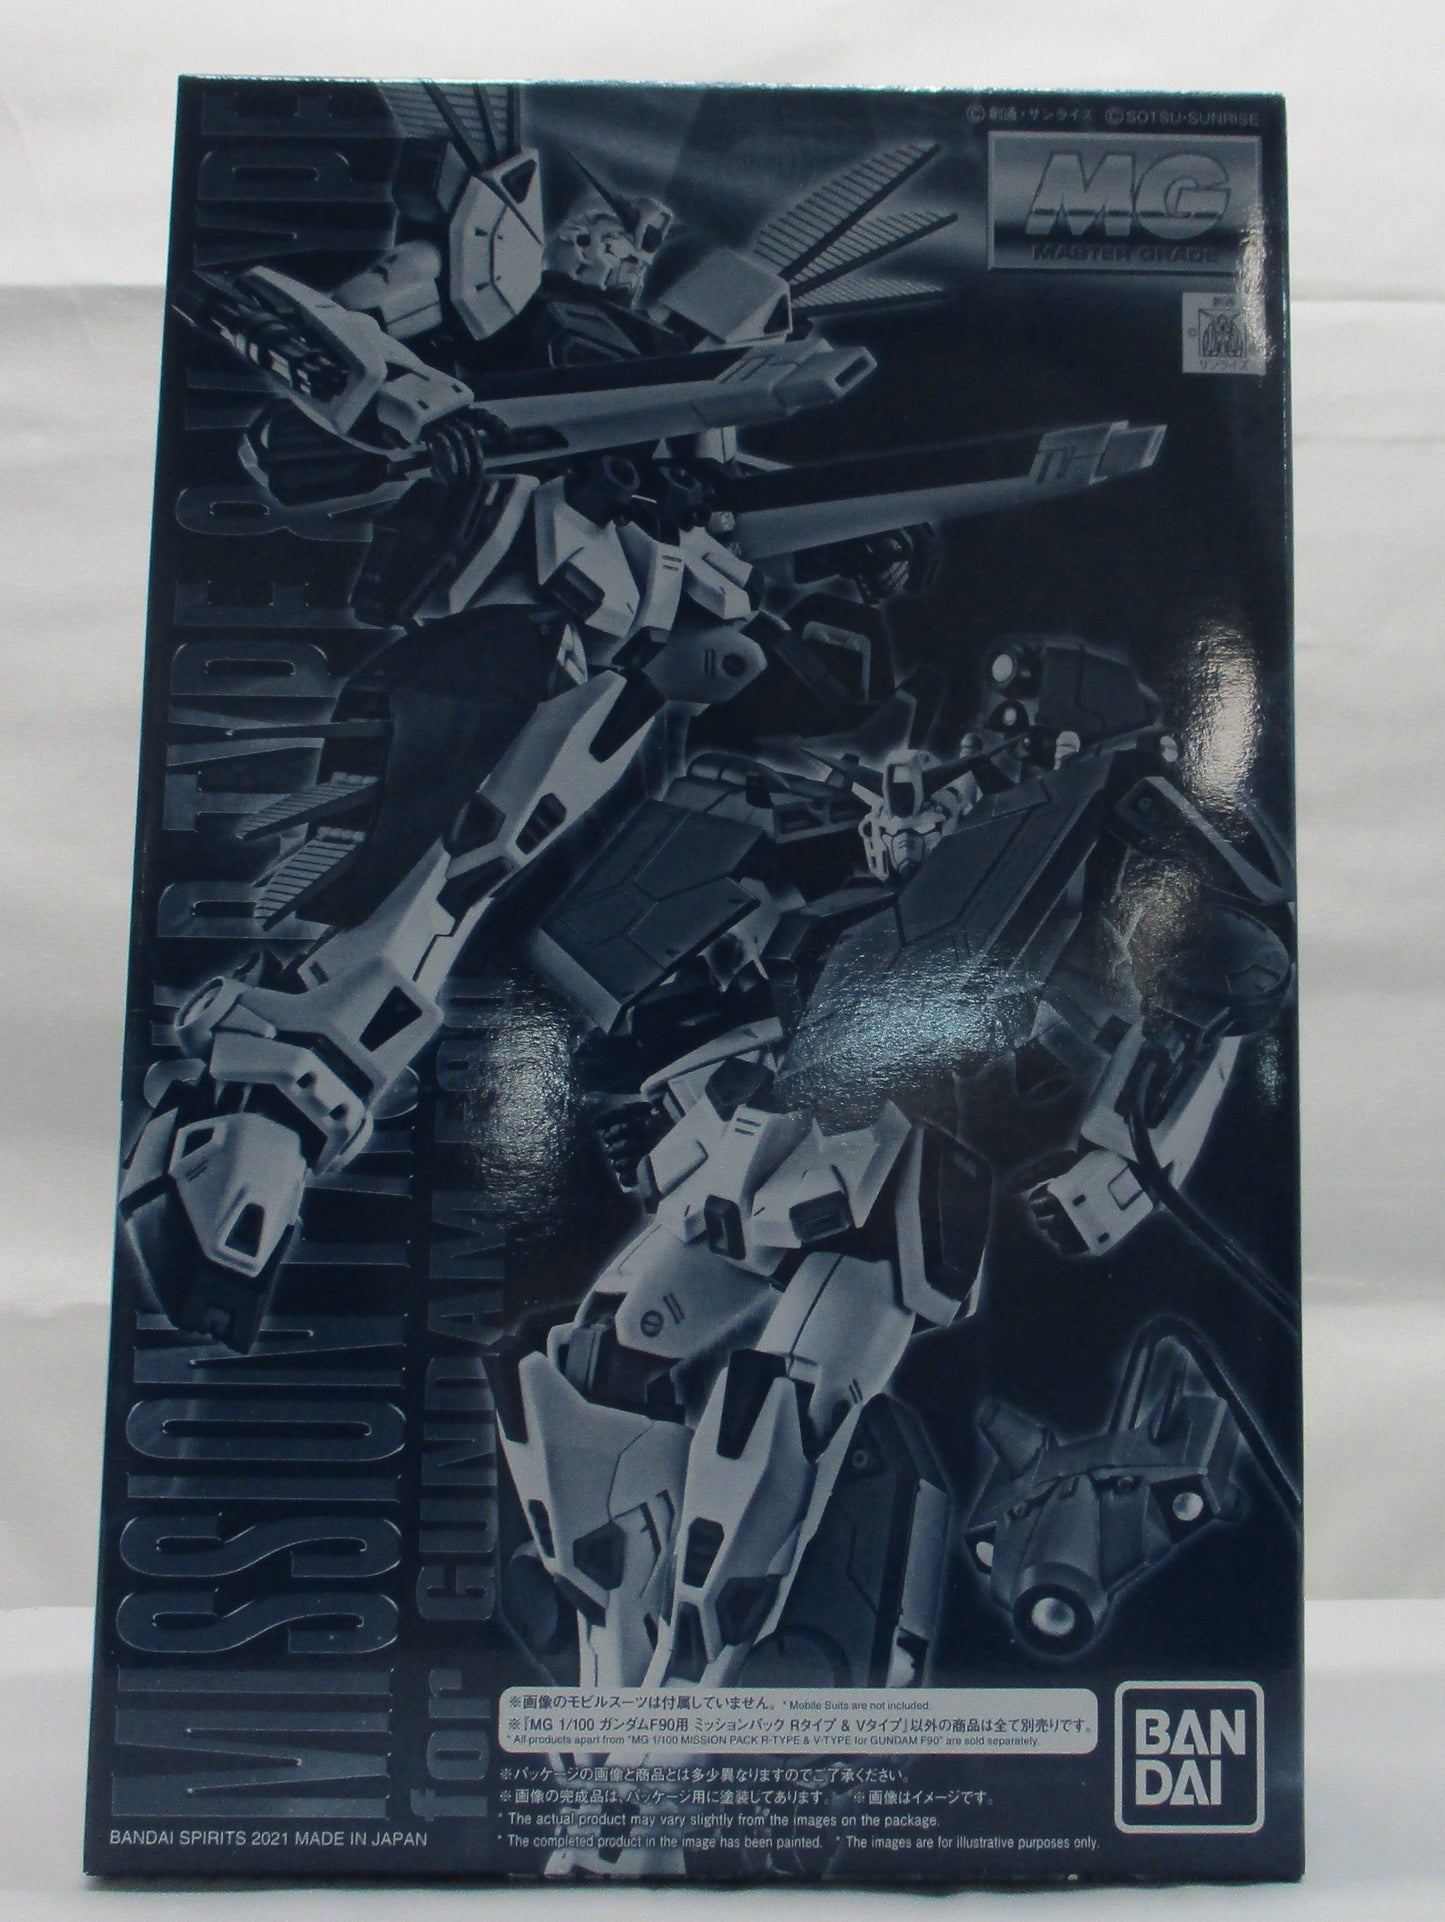 MG Gundam F90 Mission Pack R Type & V type | animota